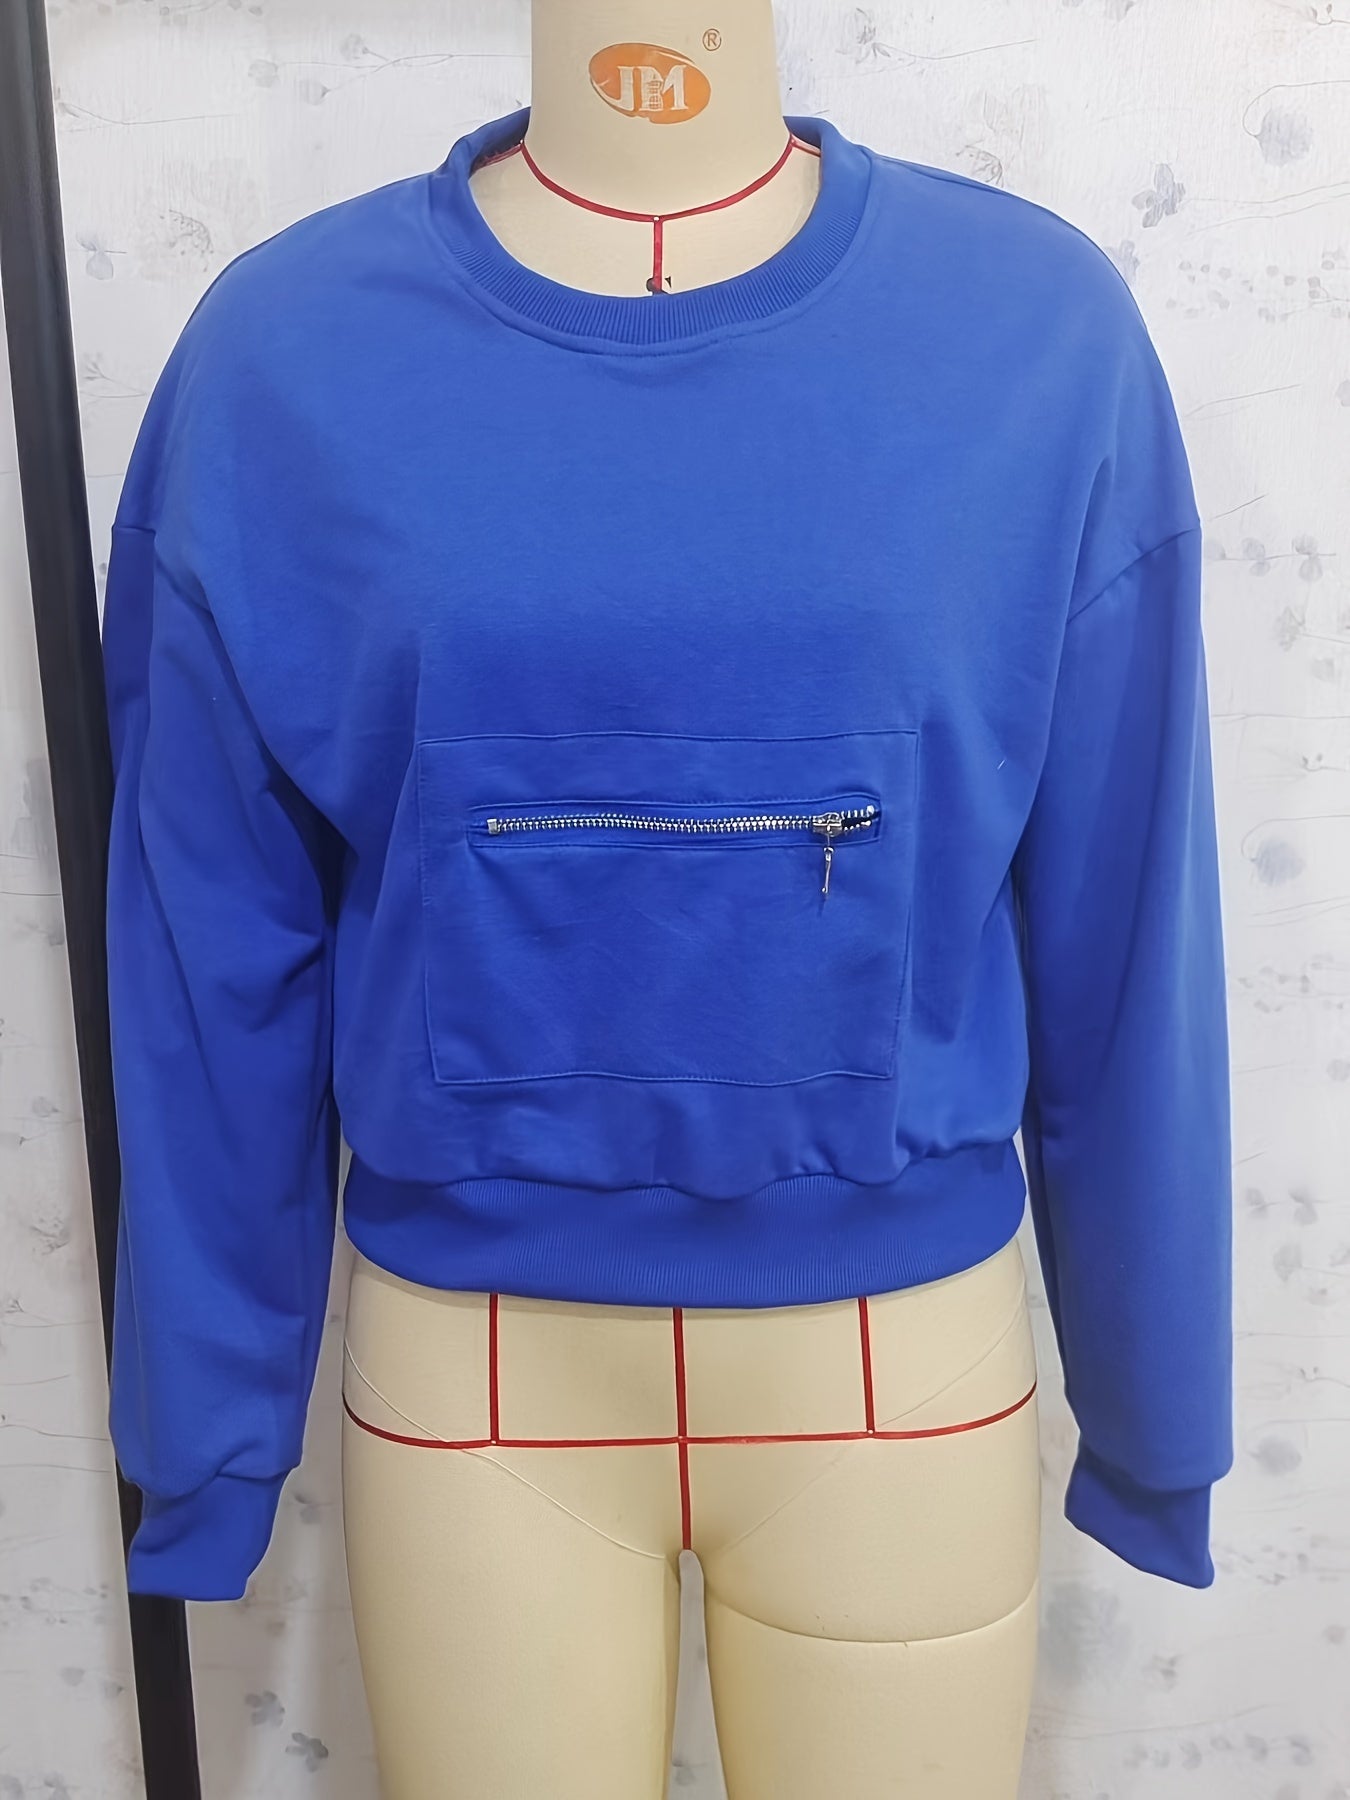 Antmvs Solid Zip Front Pullover Sweatshirt, Casual Long Sleeve Crew Neck Sweatshirt For Fall & Winter, Women's Clothing